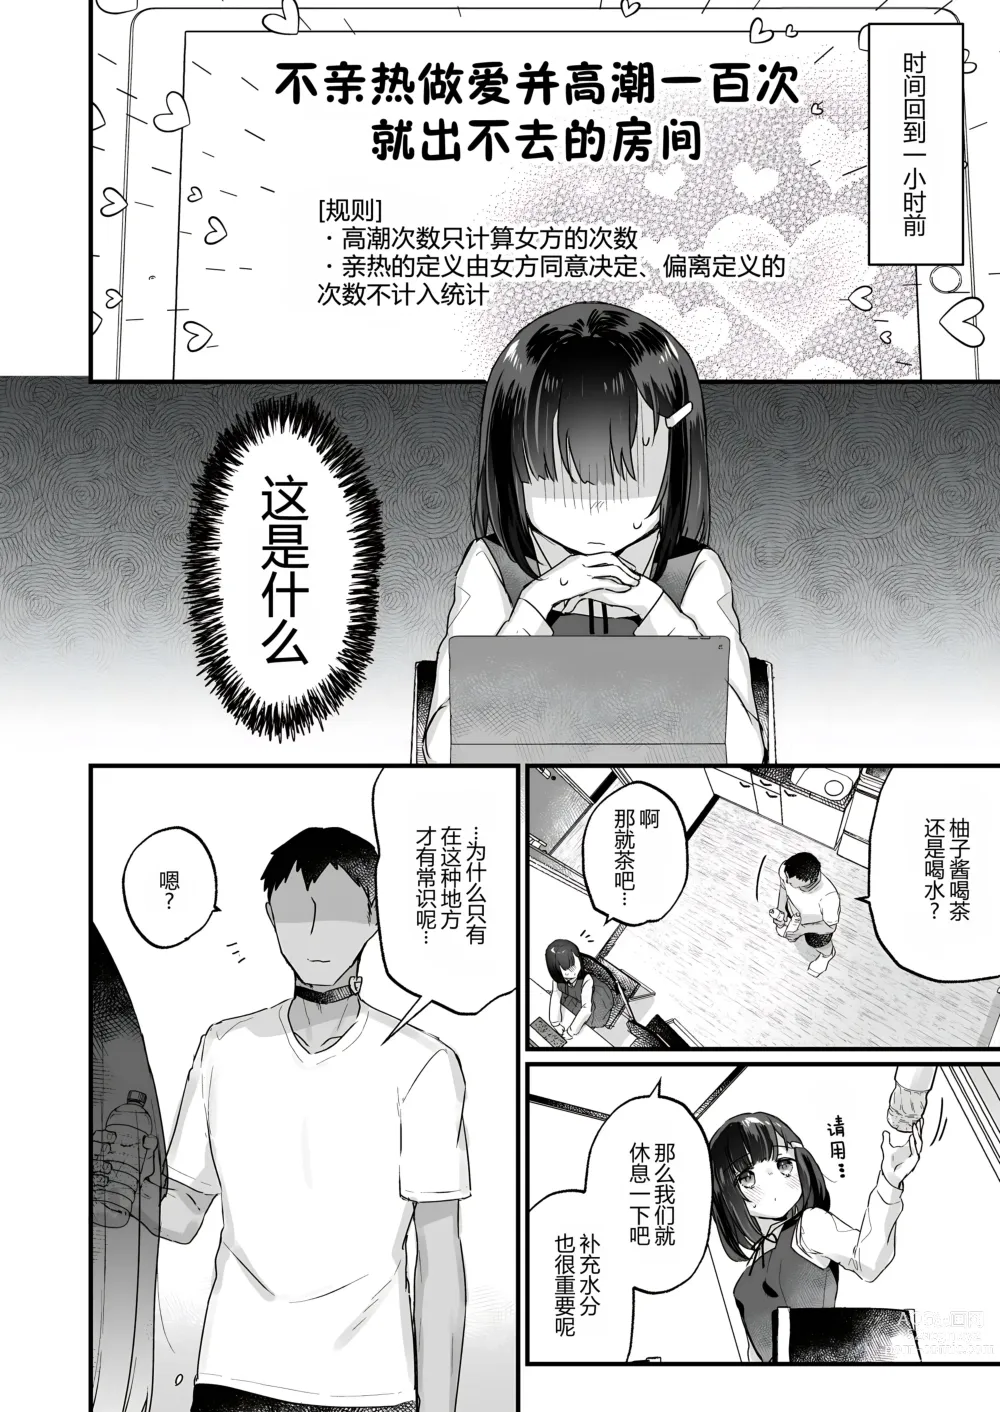 Page 5 of doujinshi 不恩爱亲热做爱100回高潮就出不去的房间